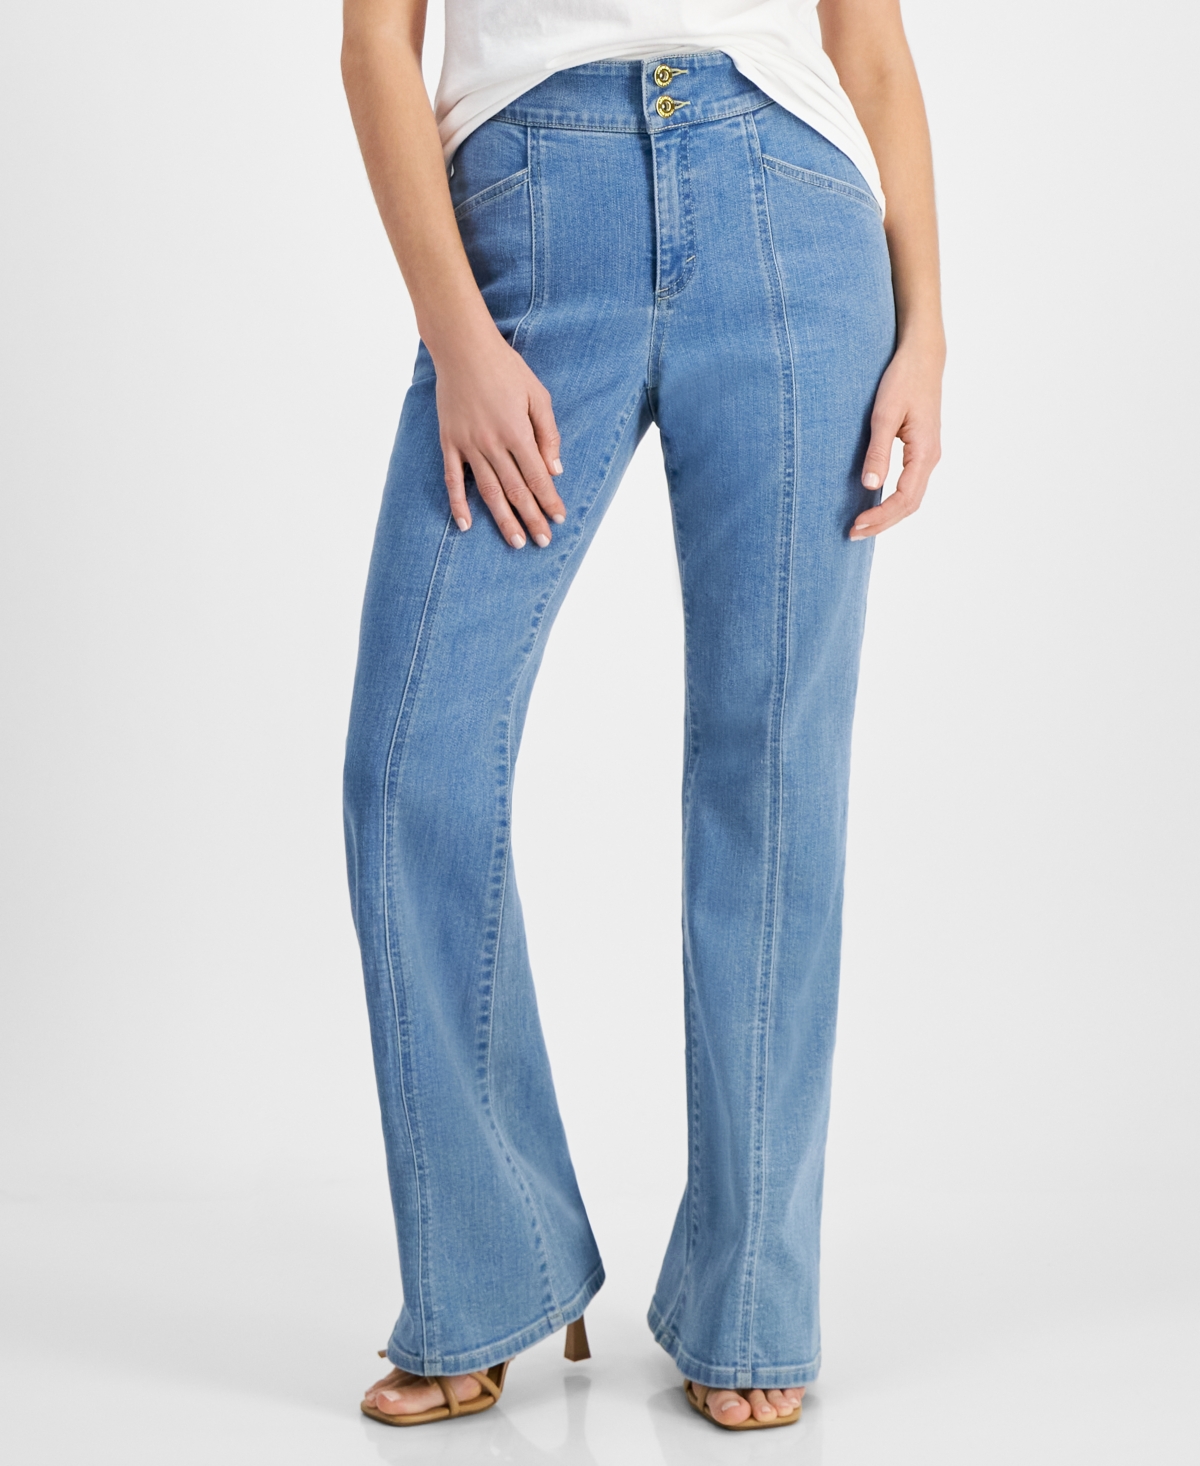 Petite Flare-Leg Front-Seam Jeans, Created for Macy's - Light Indigo